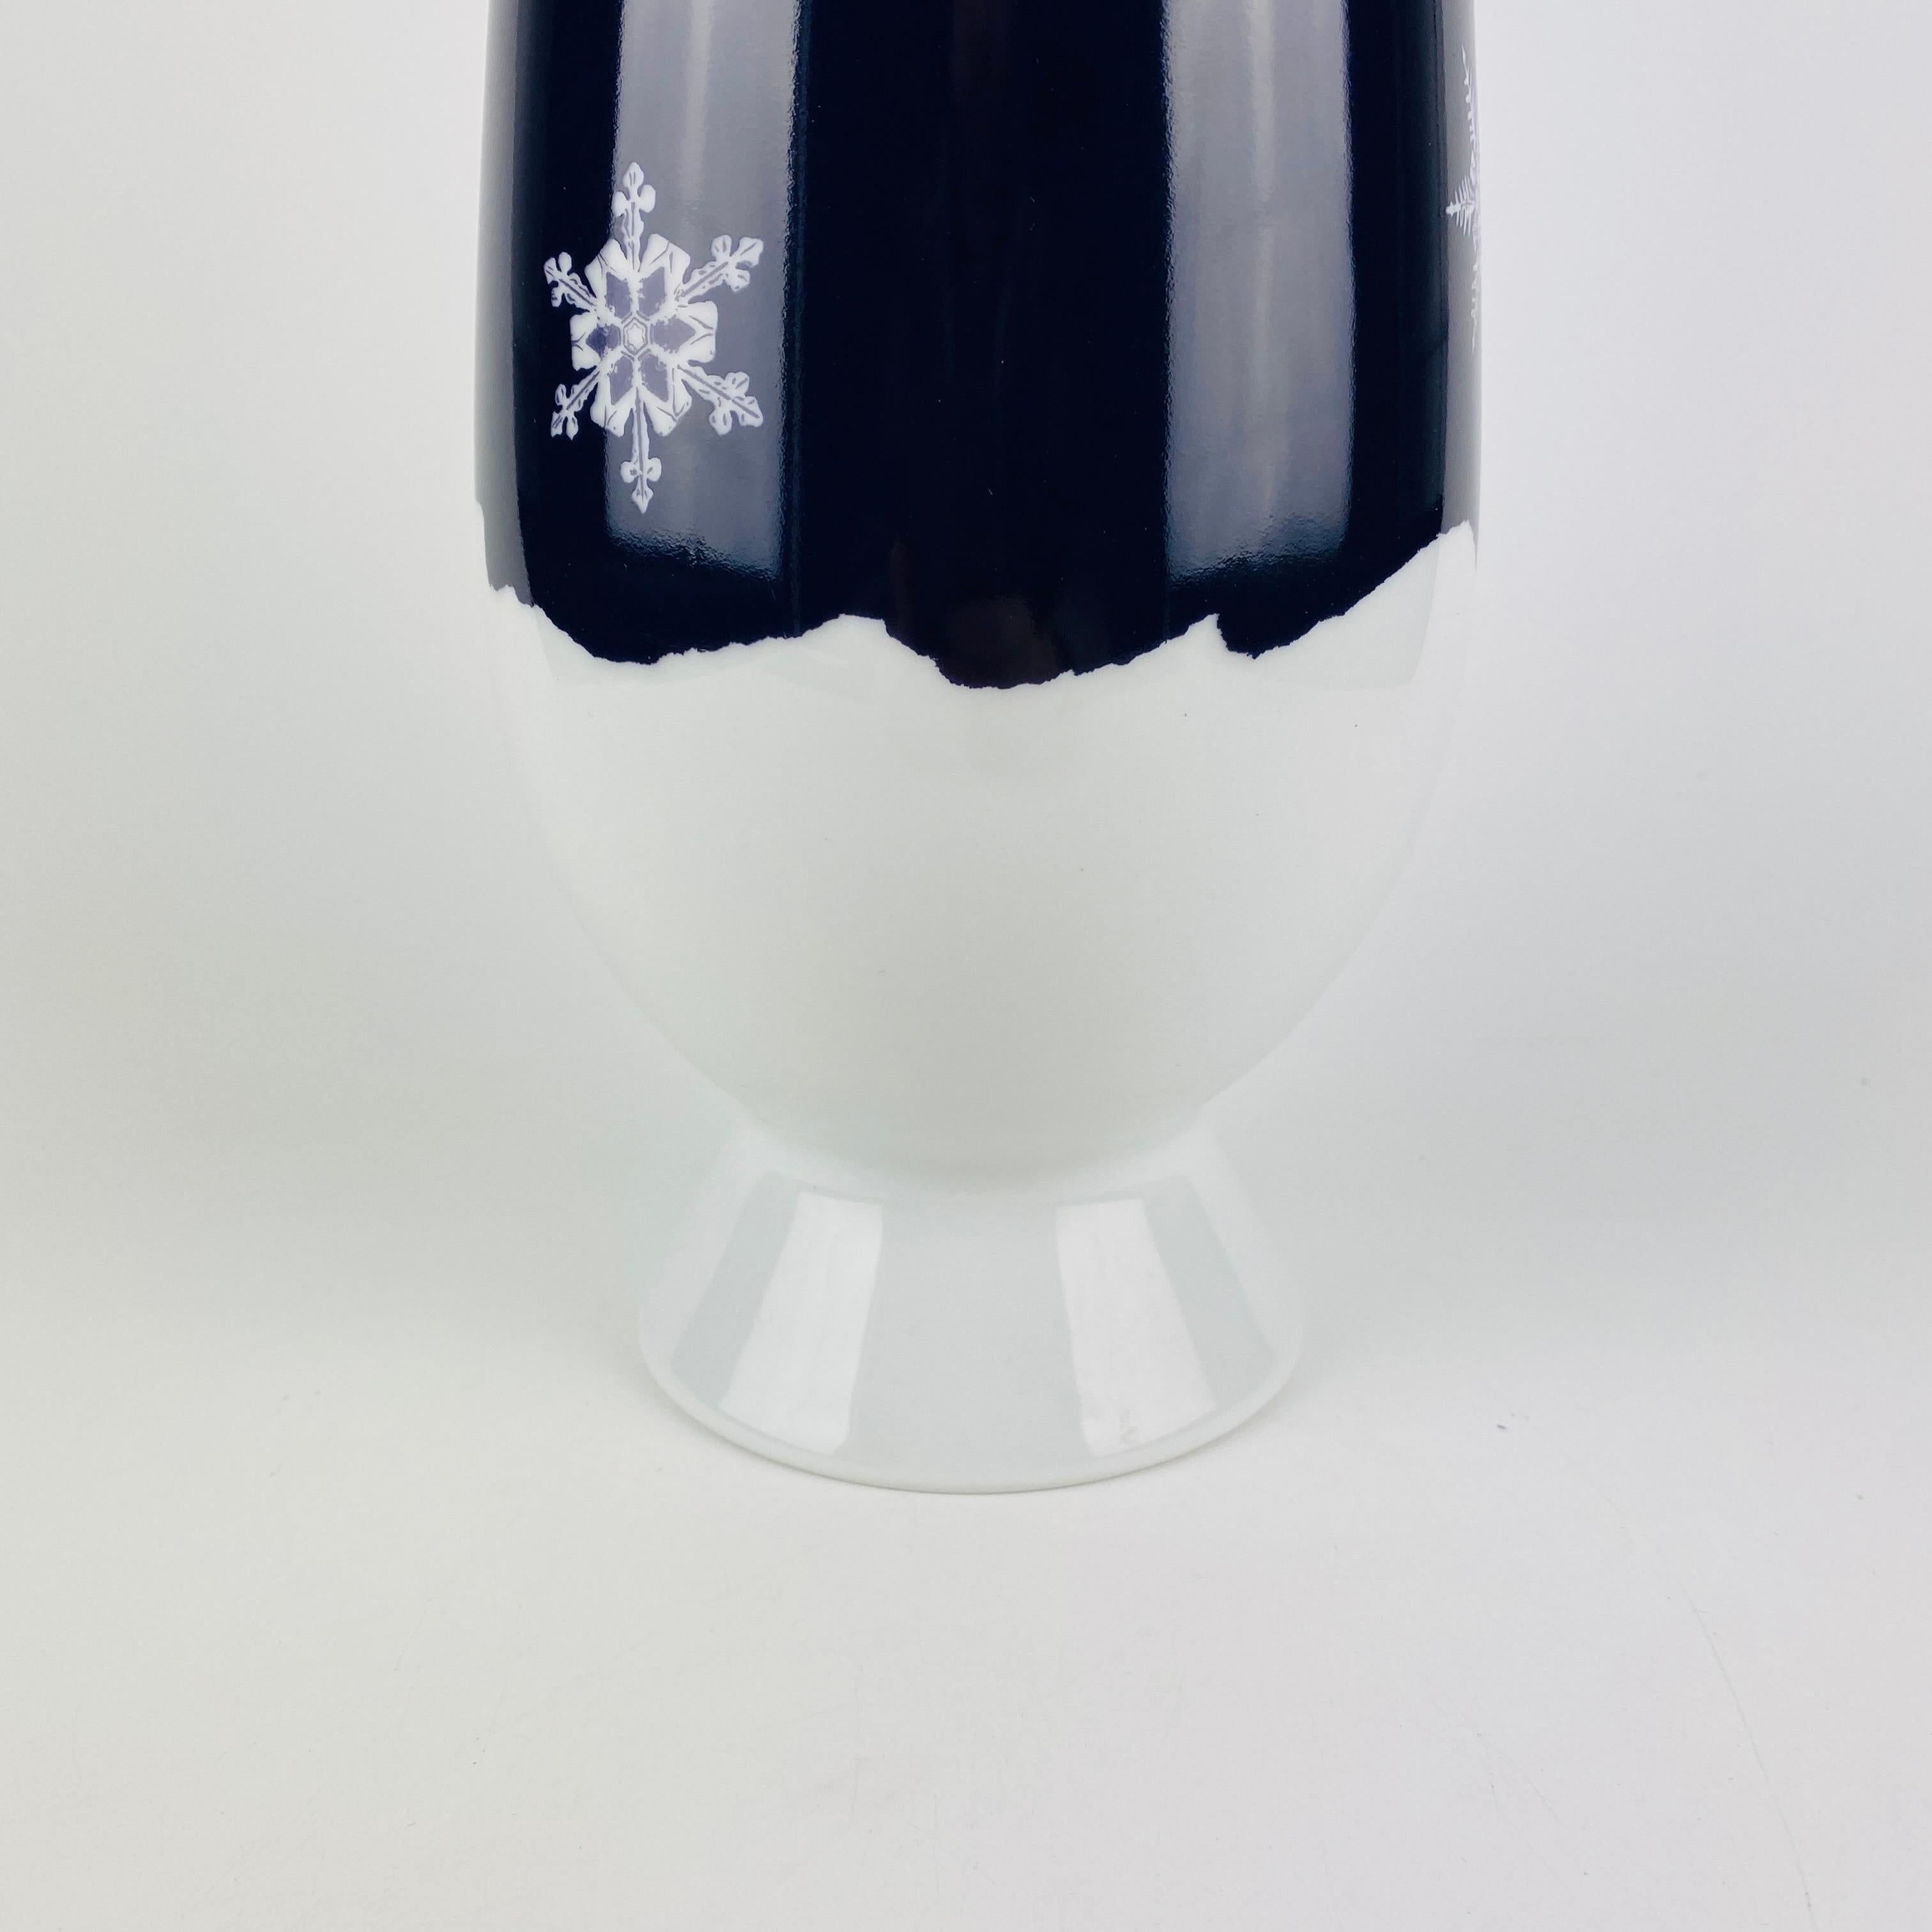 Mid-Century Modern Alessi Tendentse Vase by Jari Silvennoinen for A. Mendini 100% Make-Up Series 77